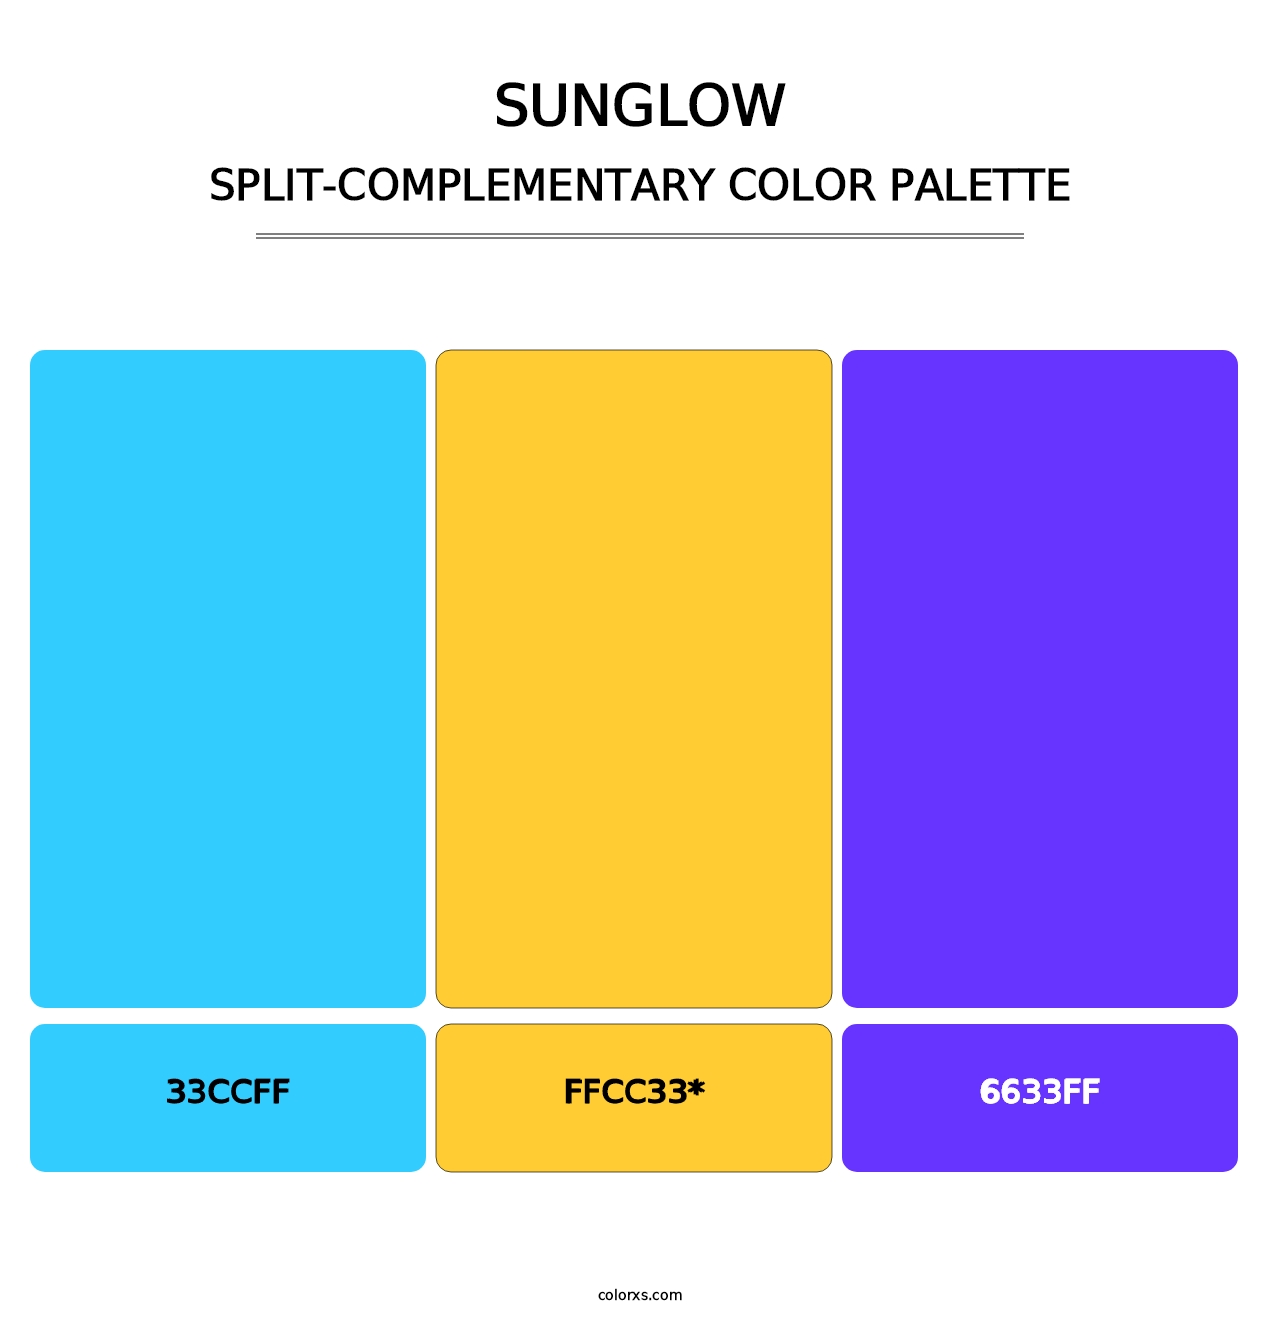 Sunglow - Split-Complementary Color Palette